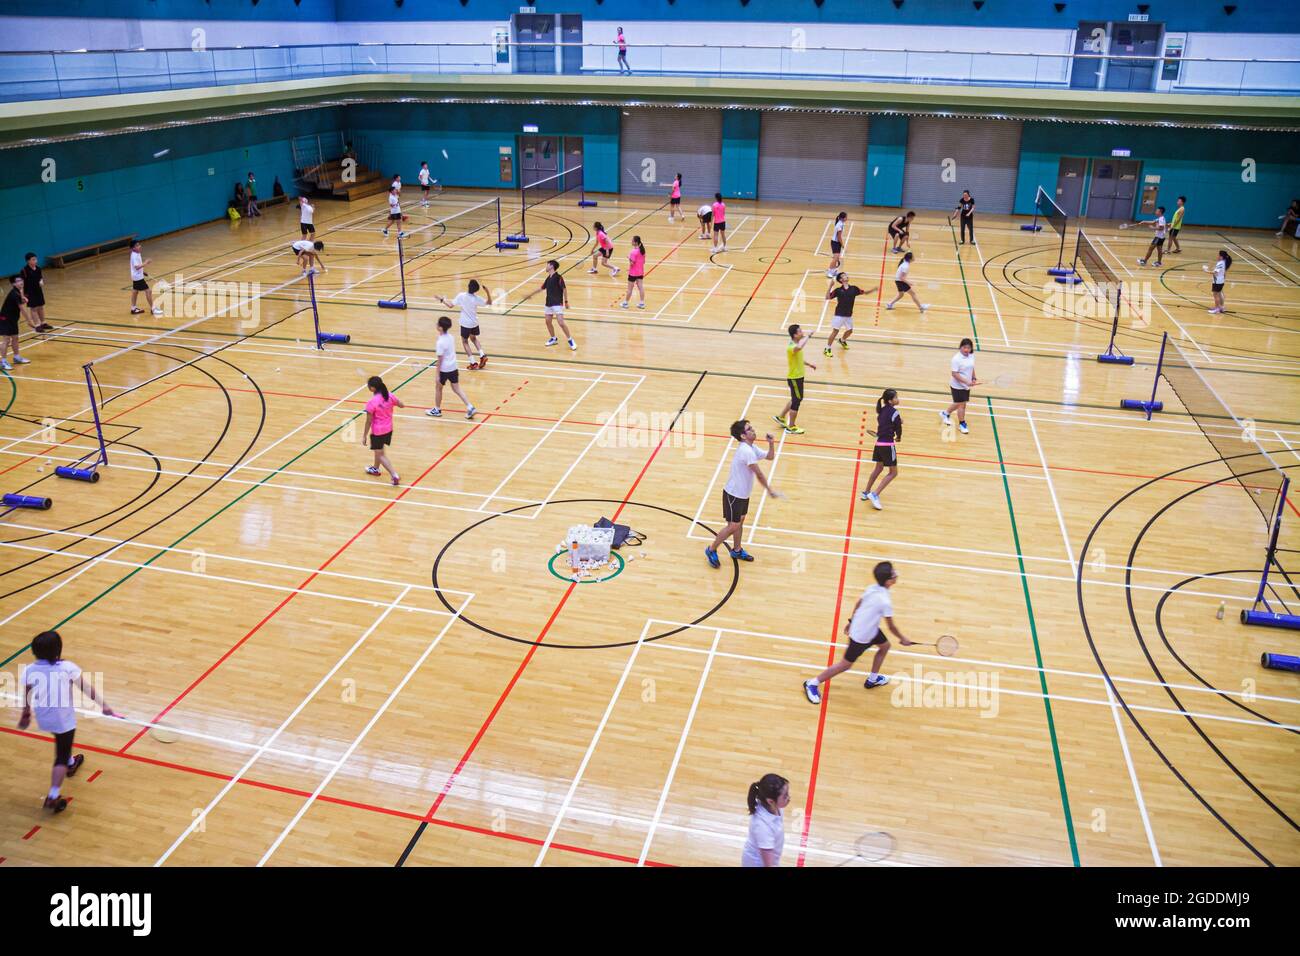 Chine Hong Kong Hong Kong HK Island Central, Hong Kong Park Sports Center Center, terrains de badminton intérieur gymnase gymnase asiatique filles femme, garçons homme studen Banque D'Images